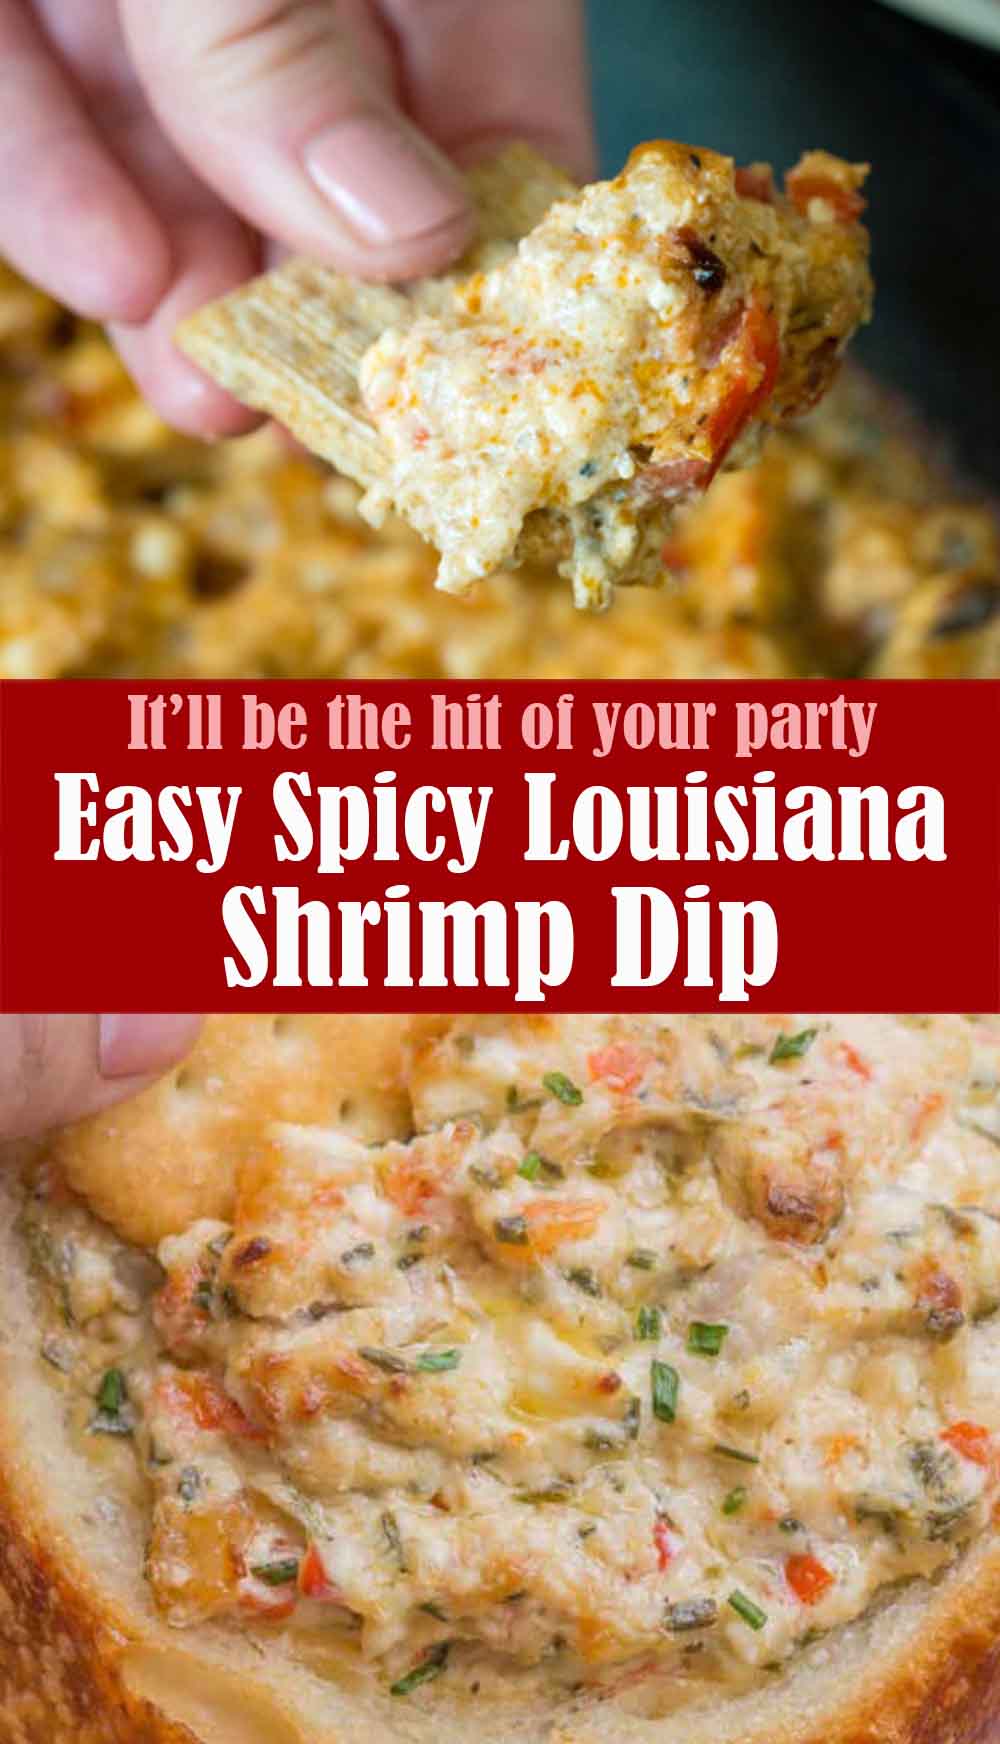 Easy Spicy Louisiana Shrimp Dip